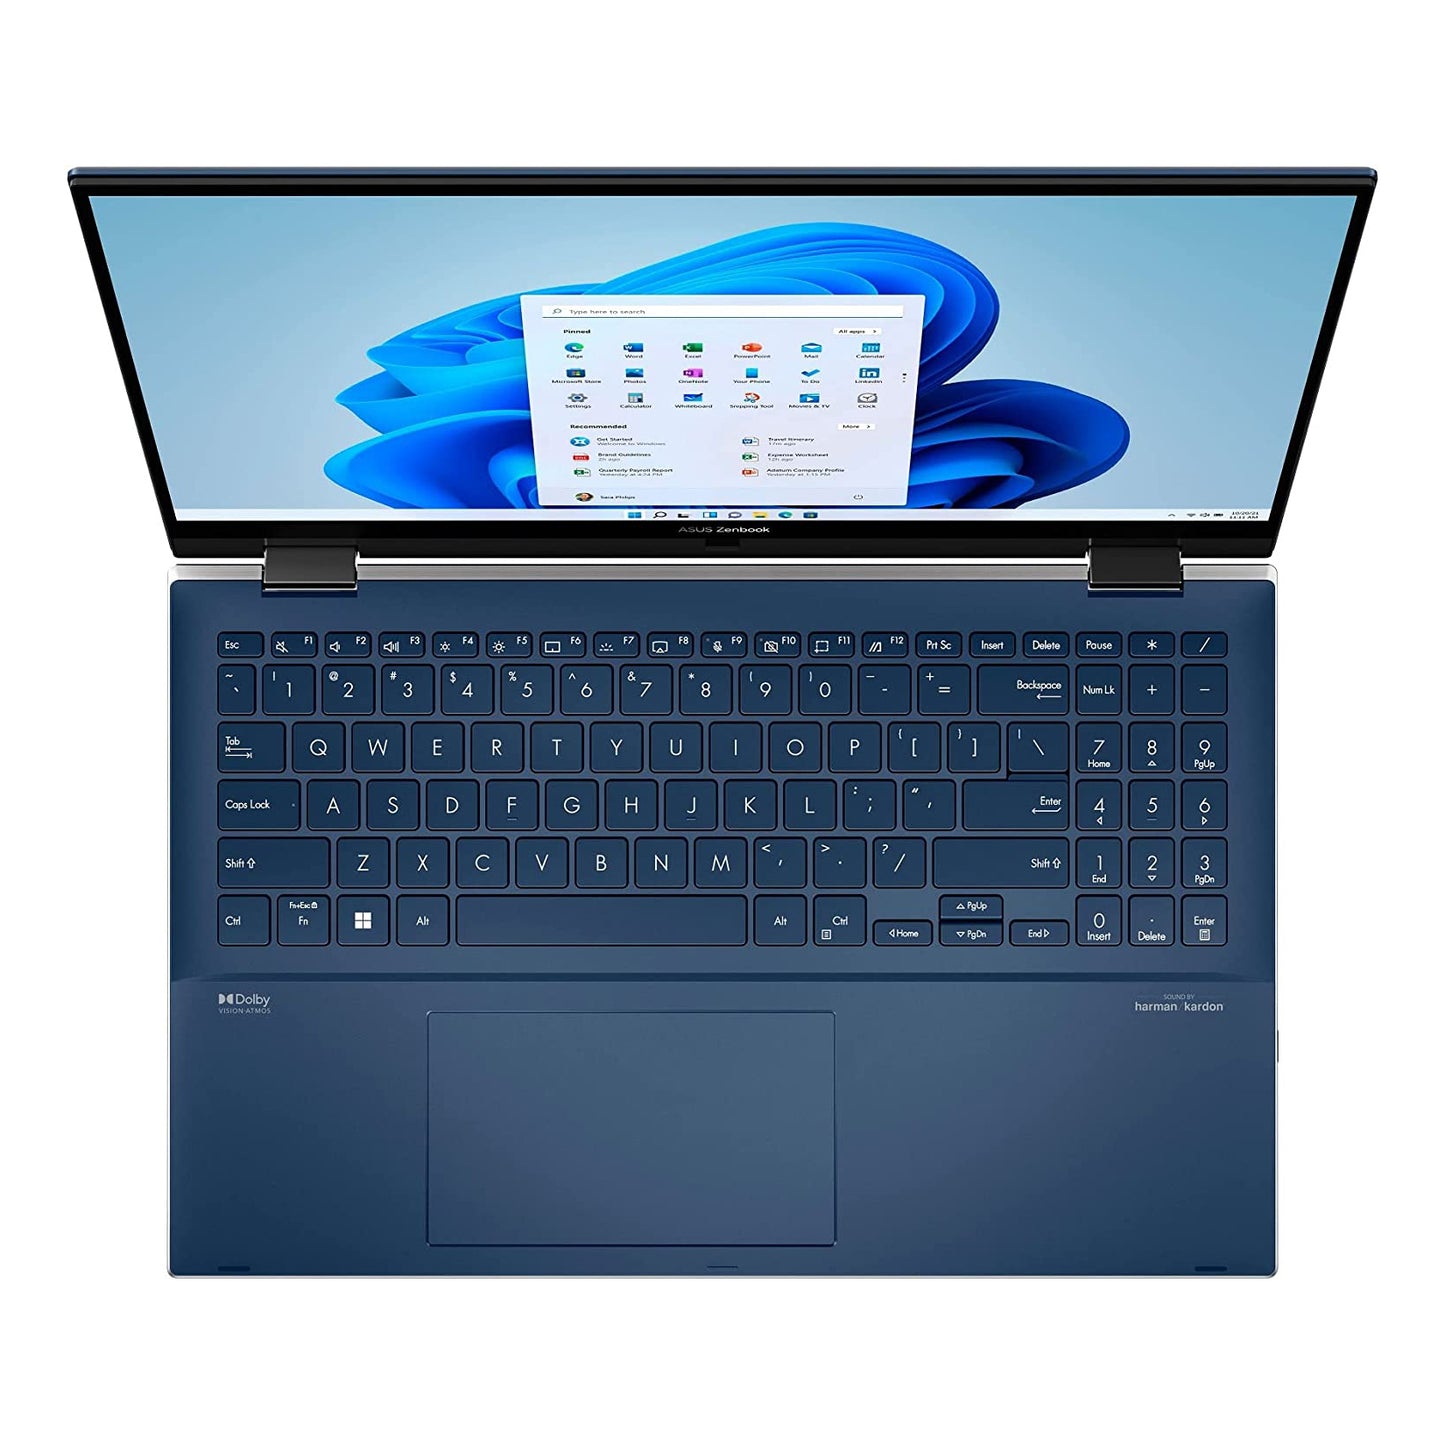 Asus ZenBook Pro Q539ZD-90NB0W31 Core i7-12700h Arc A370m 2.8k OLED 120hz 2in1 Touch Laptop (Brand New)